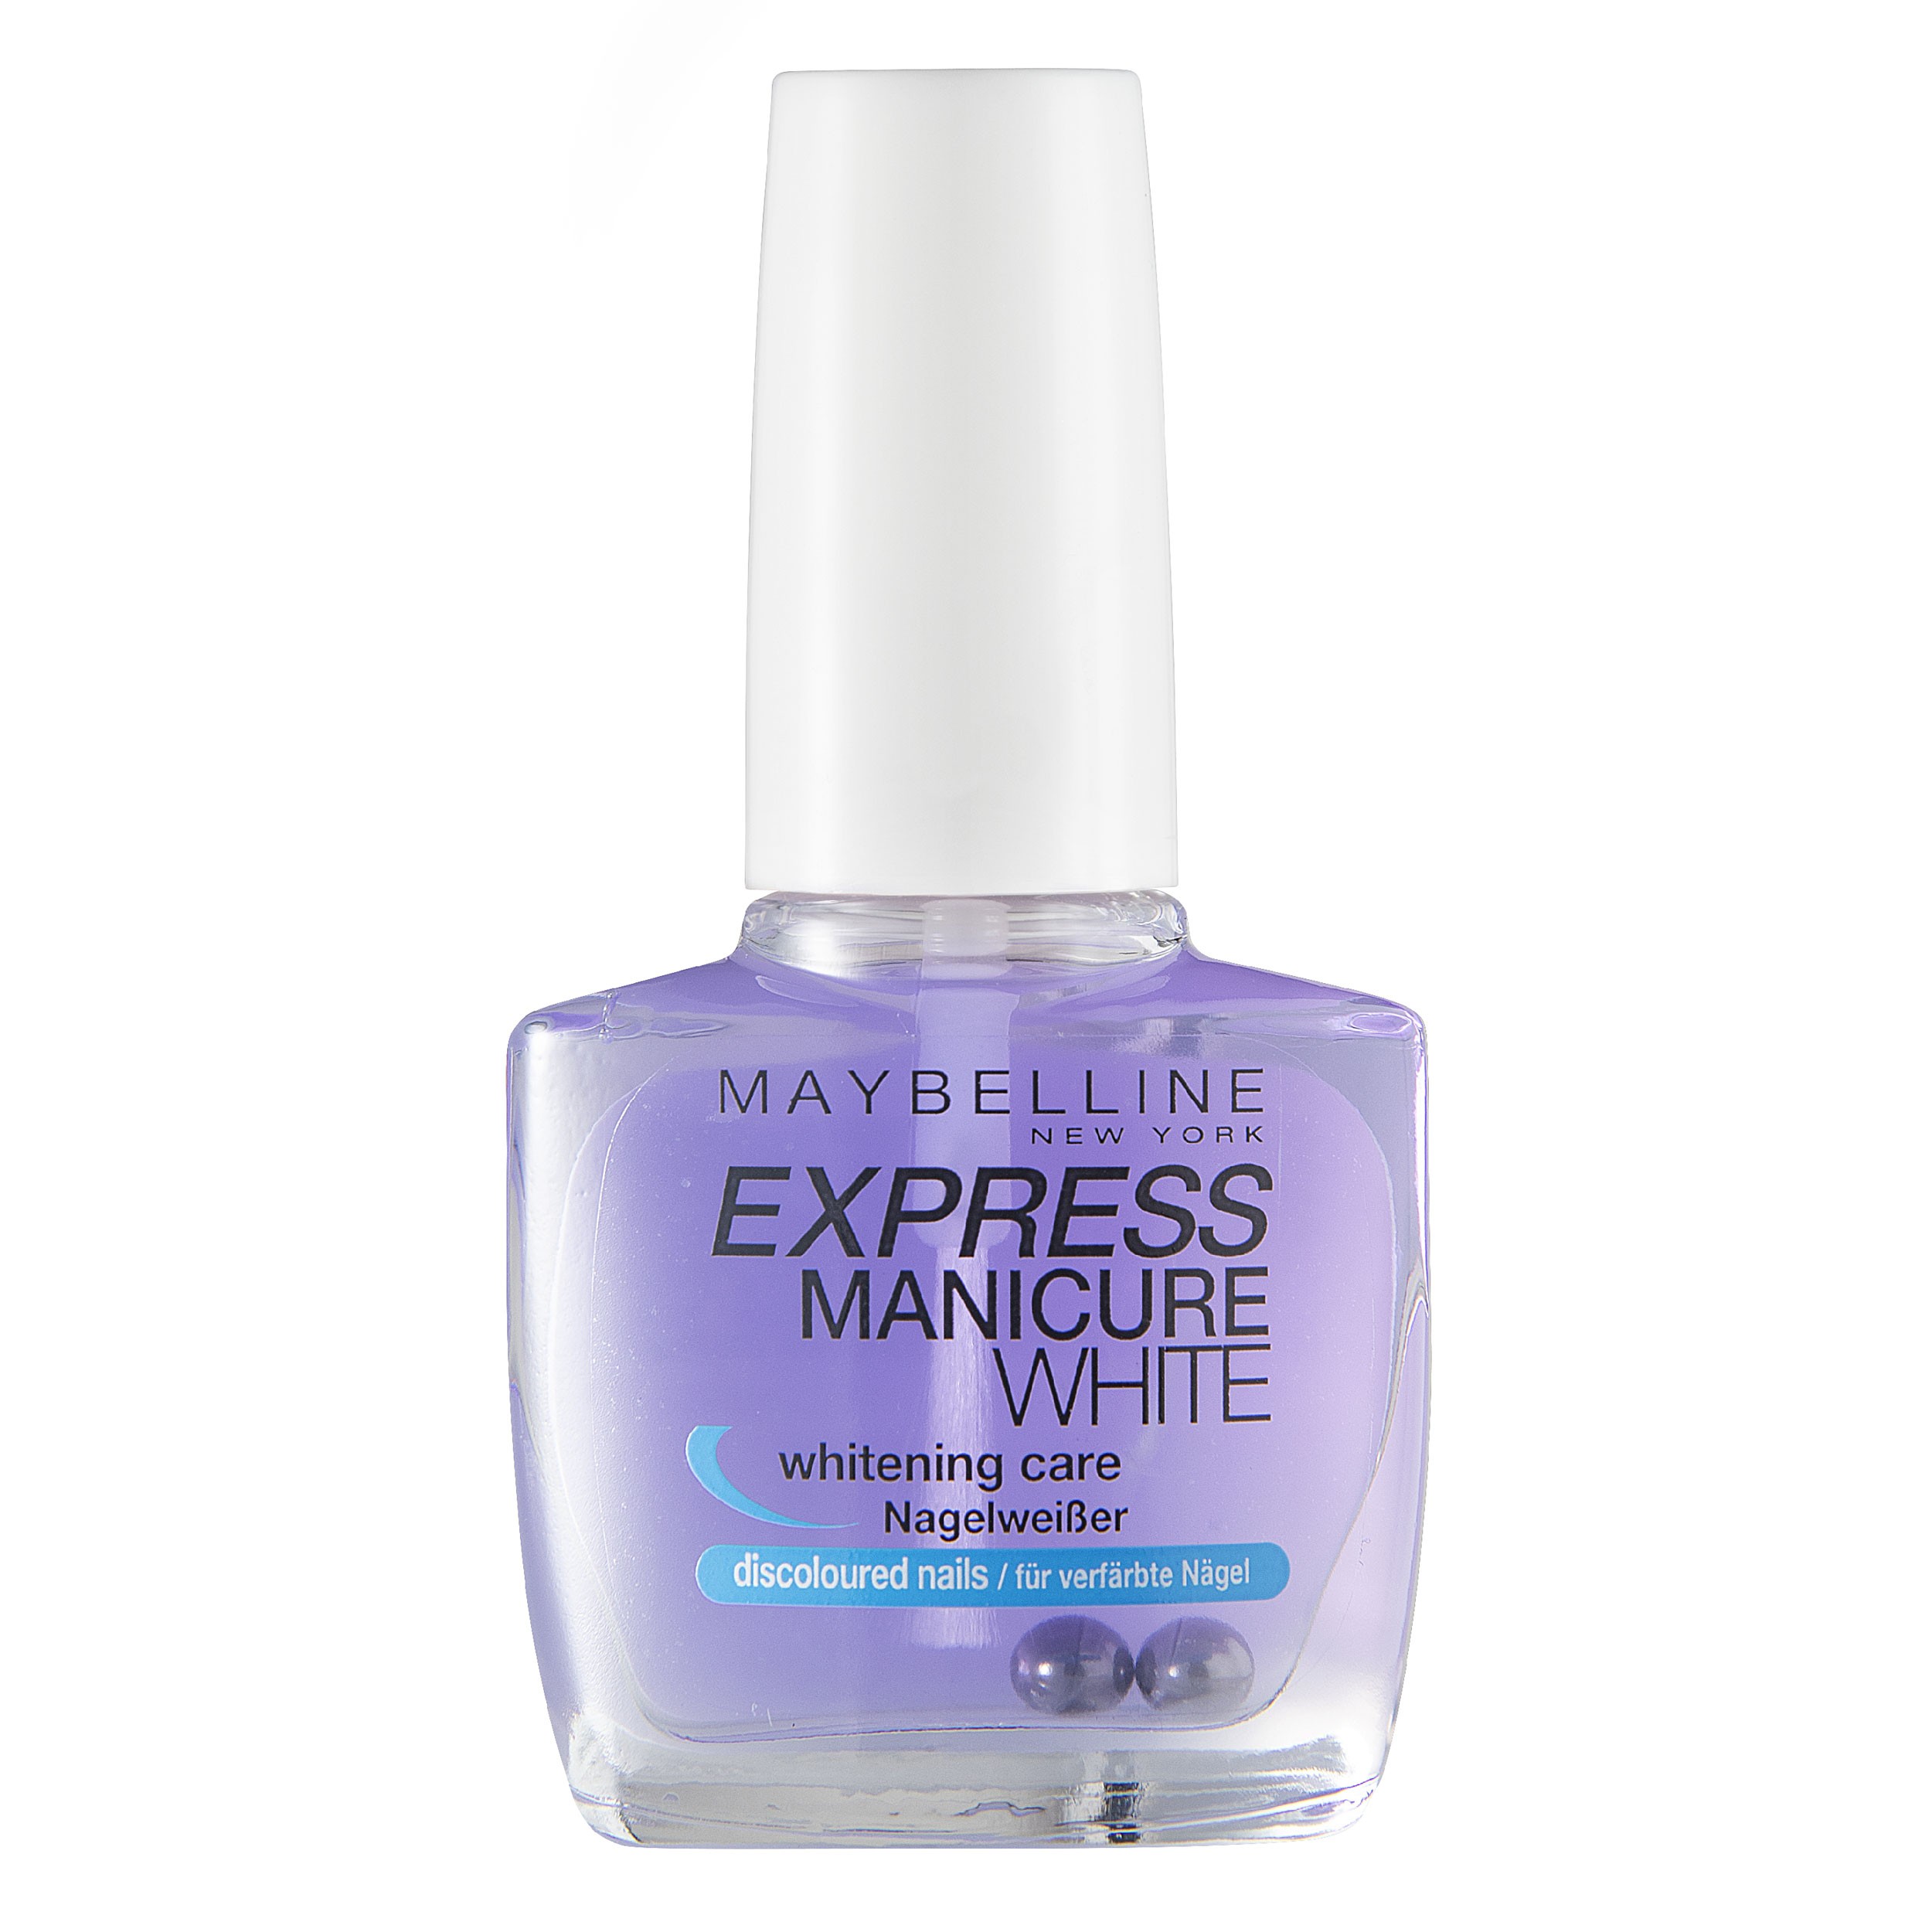 Express Manicure White